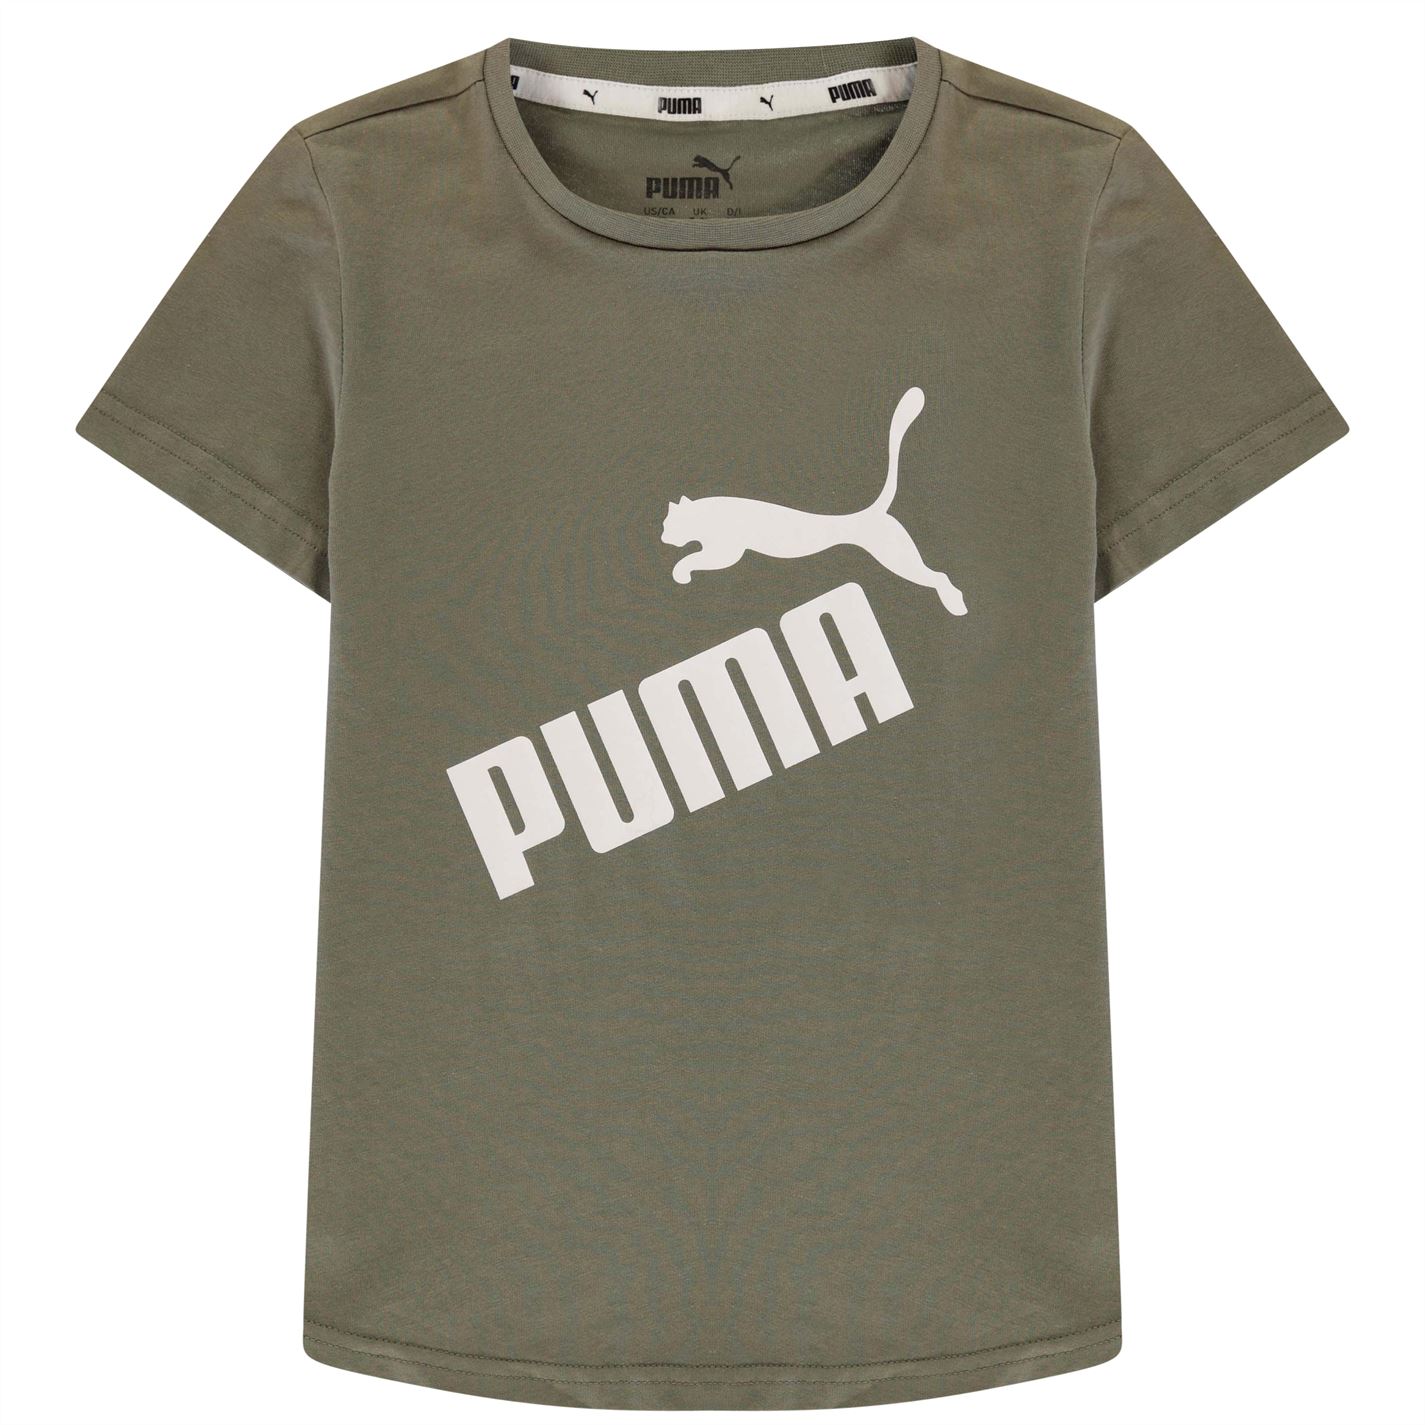 Camasa Puma Logo T copil fetita